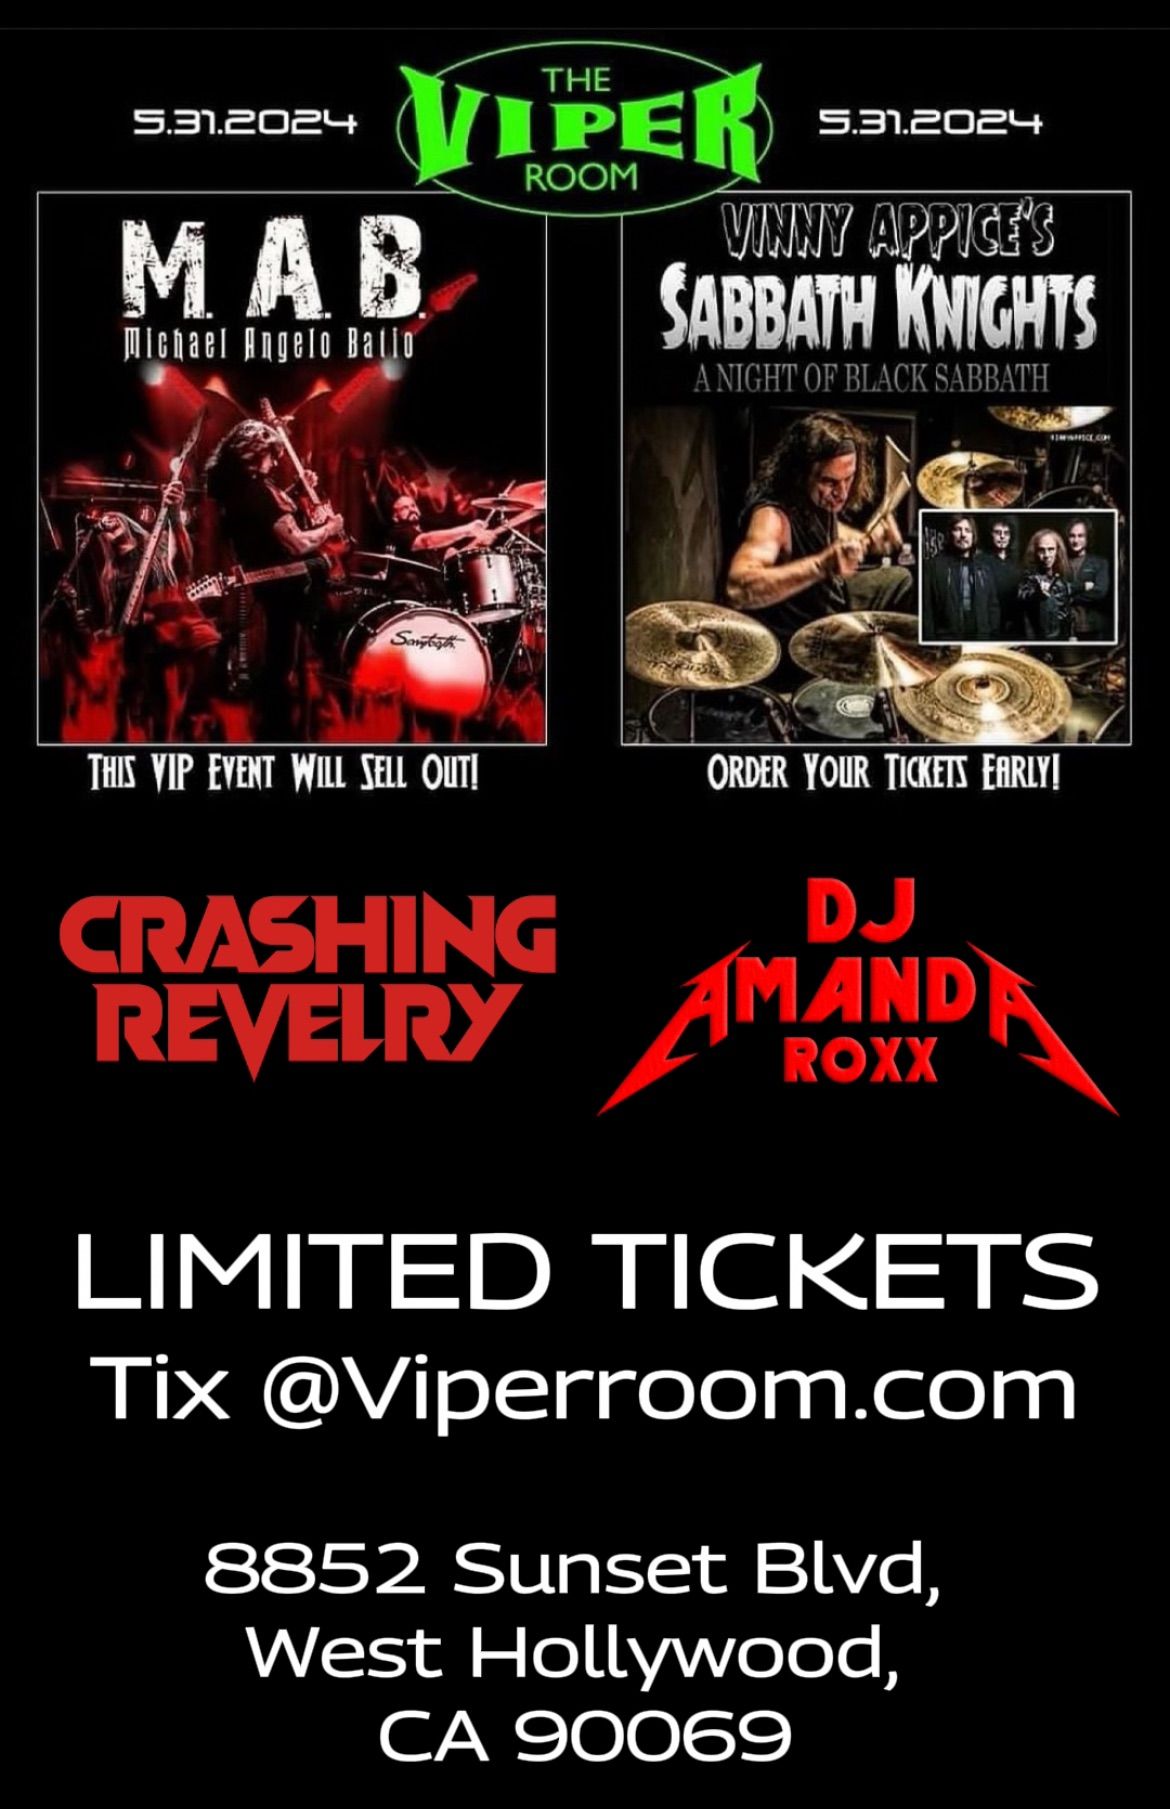 Vinny Appice\u2019s Sabbath Nights, Michael Angelo Batio, Crashing Revelry!